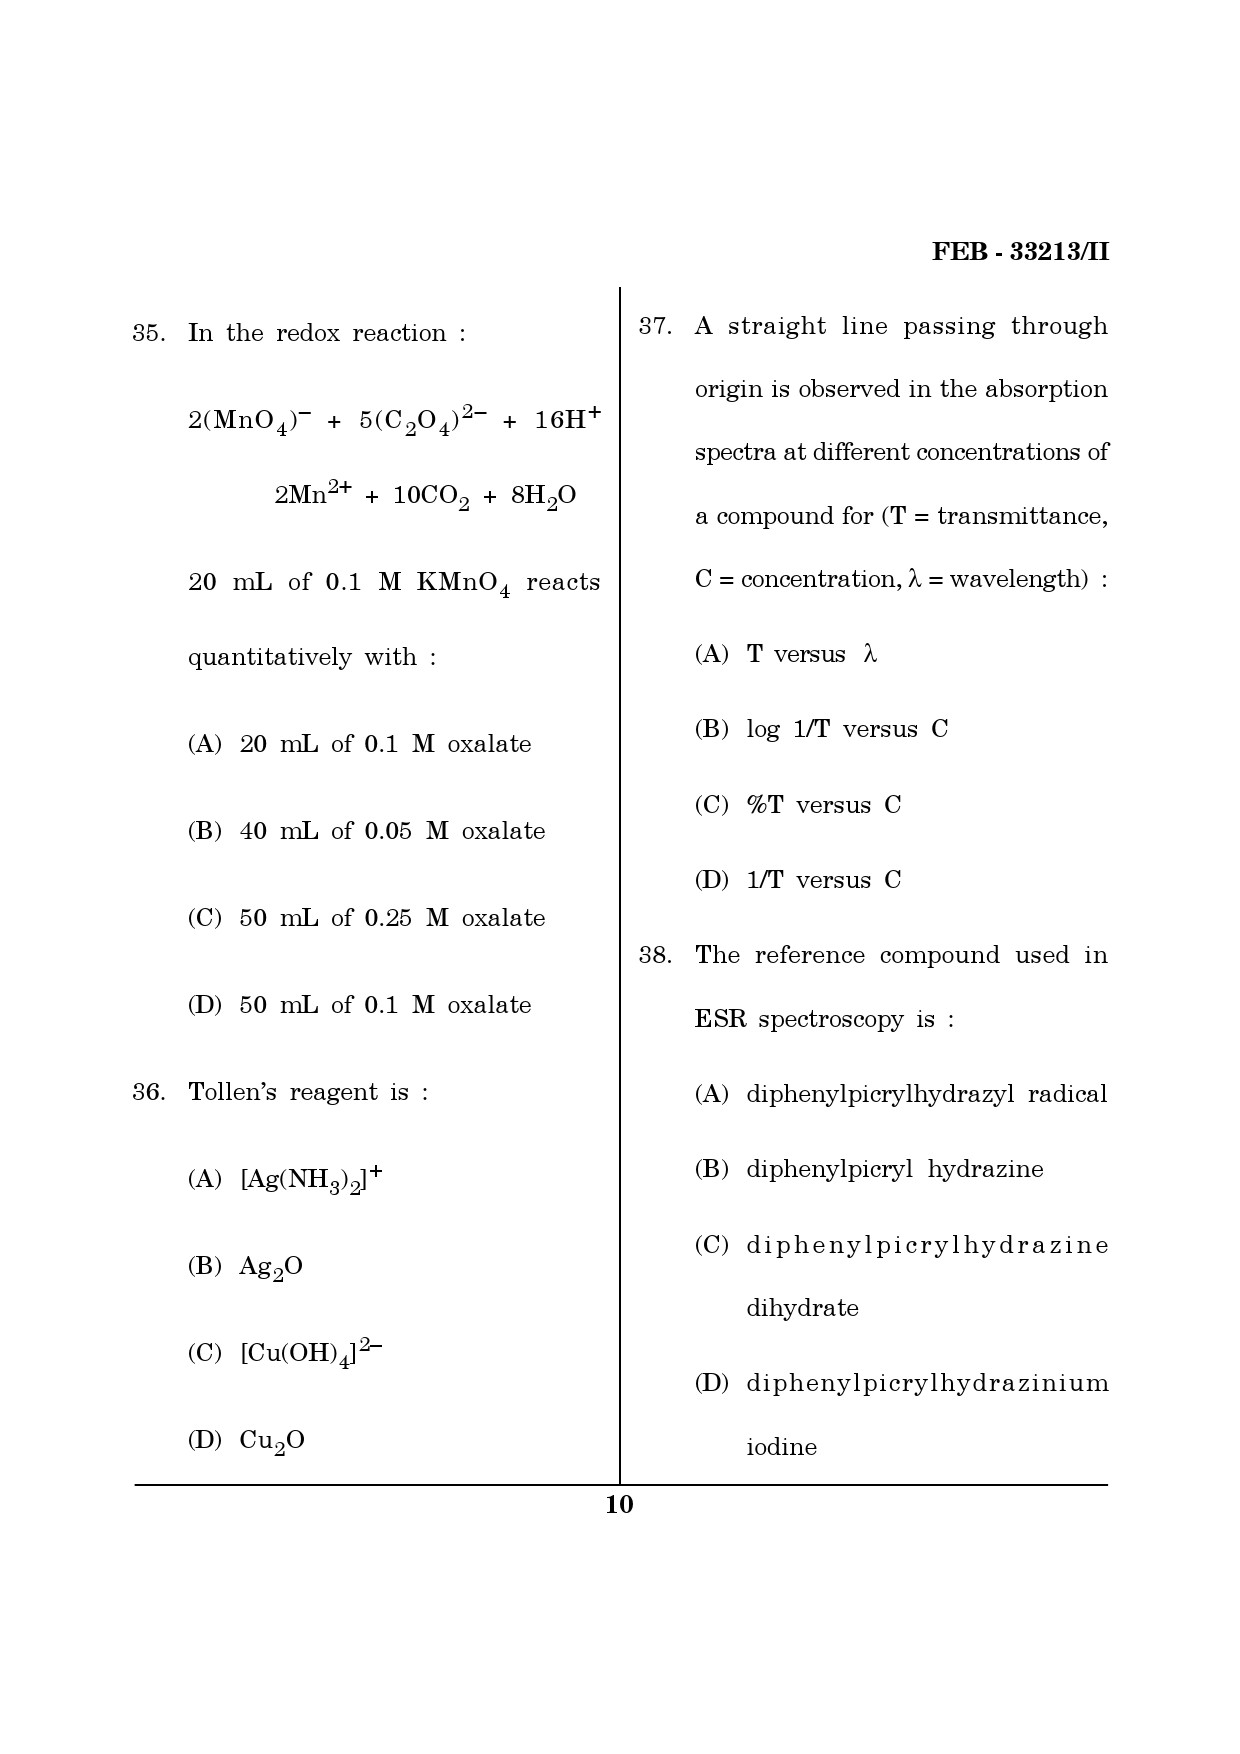 Maharashtra SET Chemical Sciences Question Paper II February 2013 10